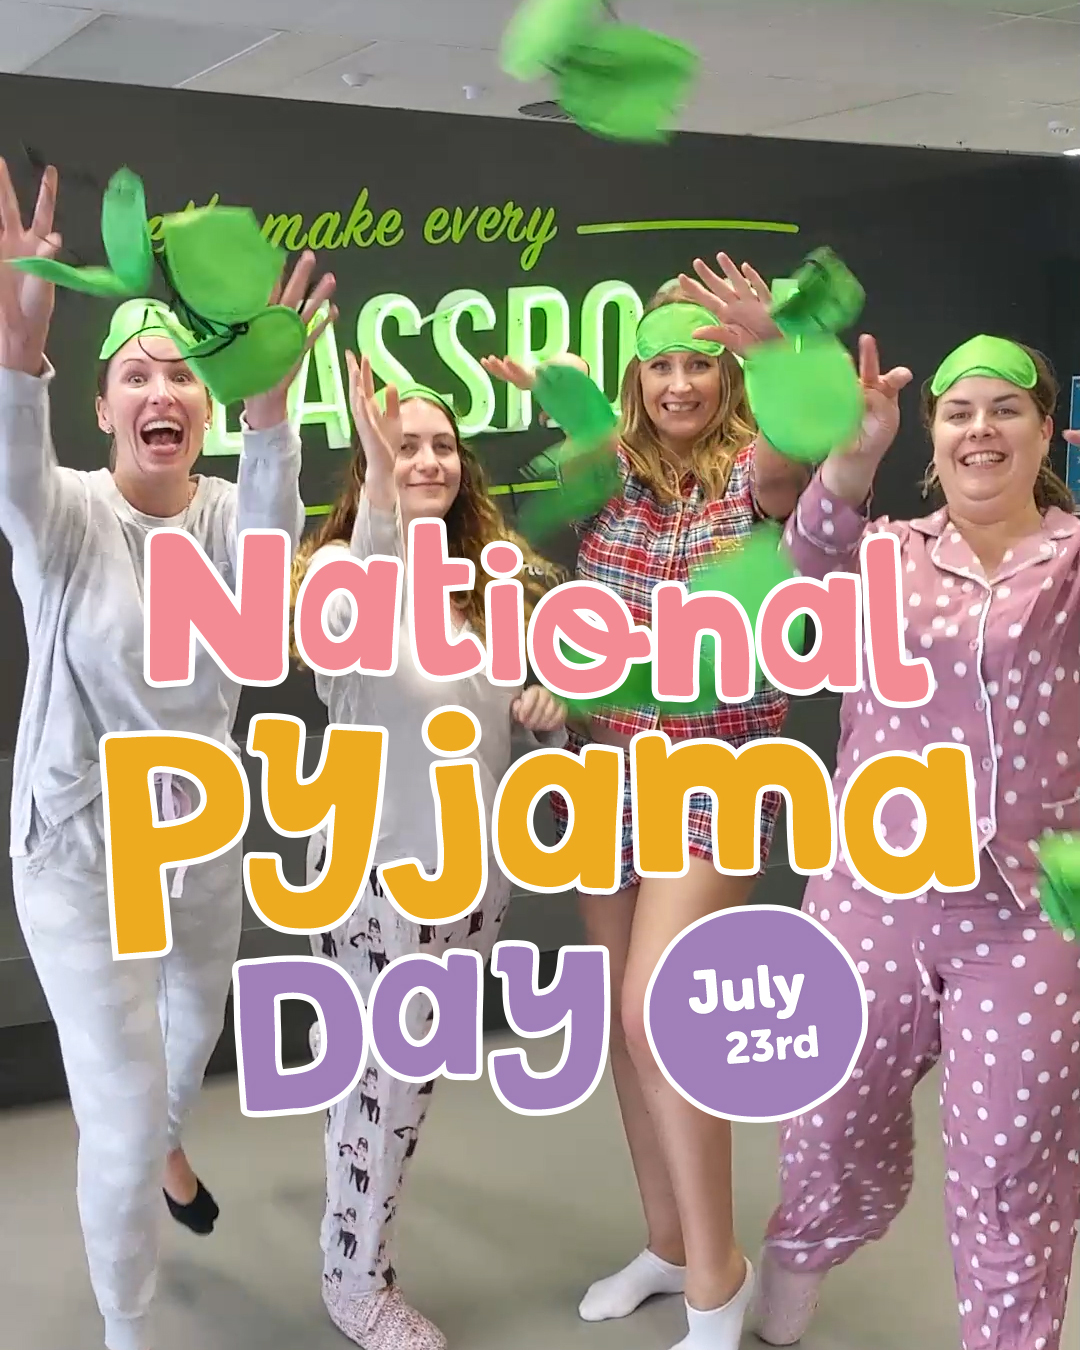 National Pyjama Day